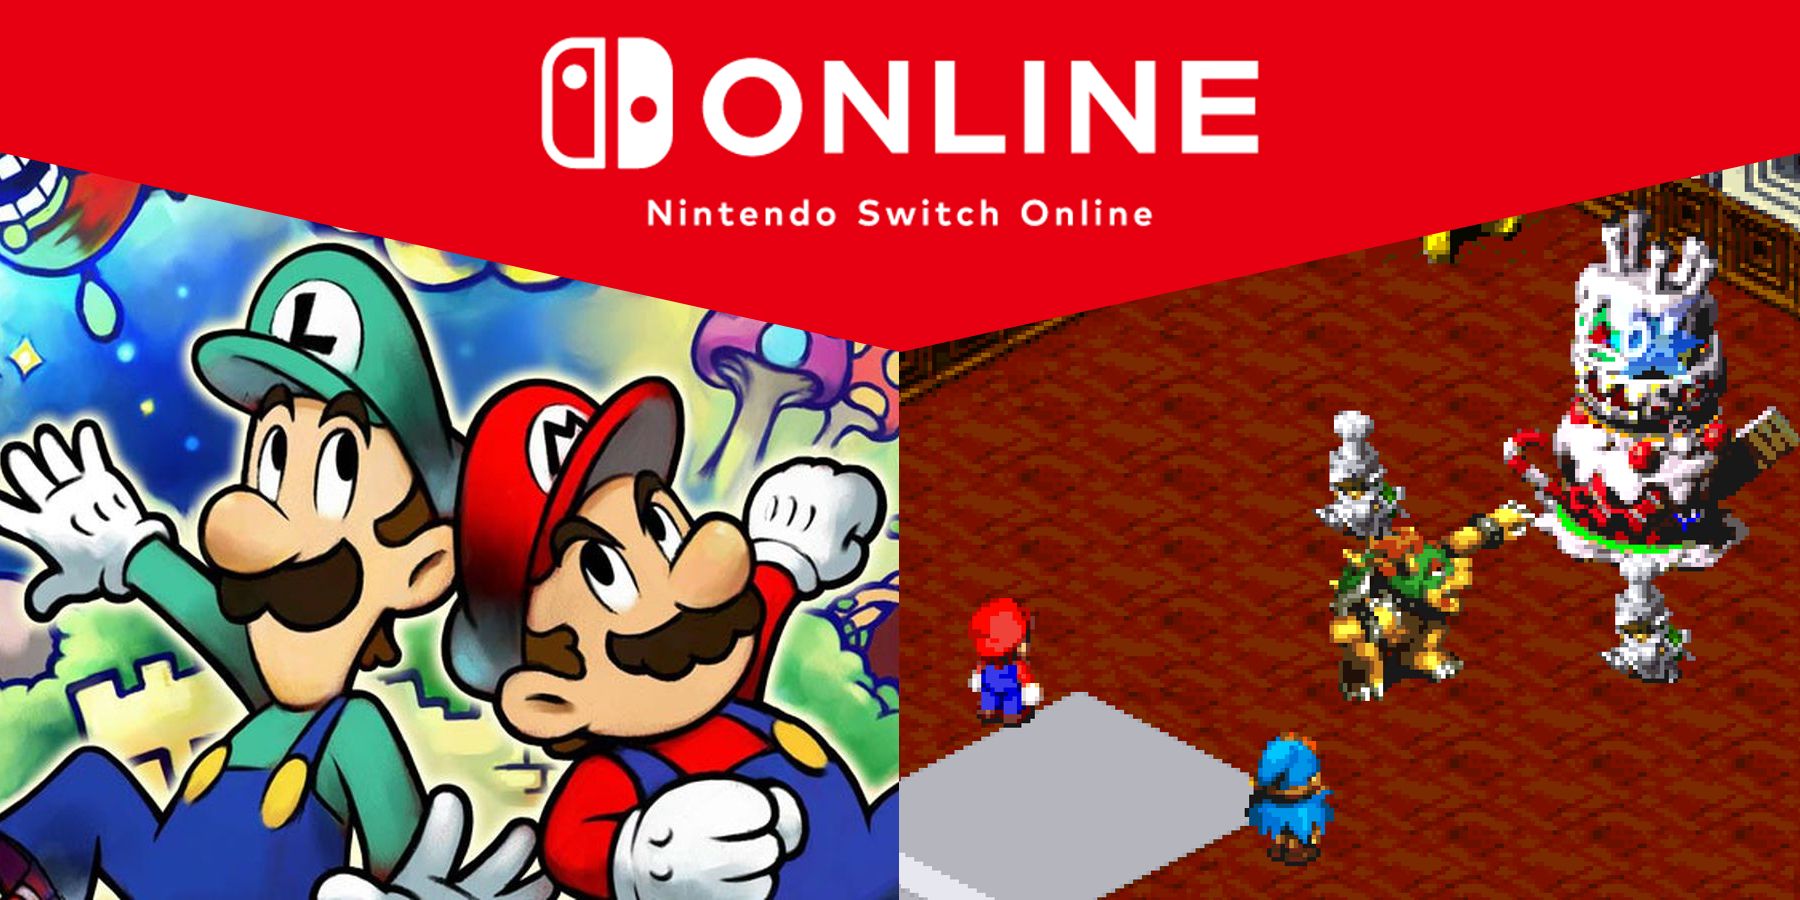 Mario & Luigi : Superstar Saga [USA] - Nintendo Gameboy Advance (GBA) rom  download